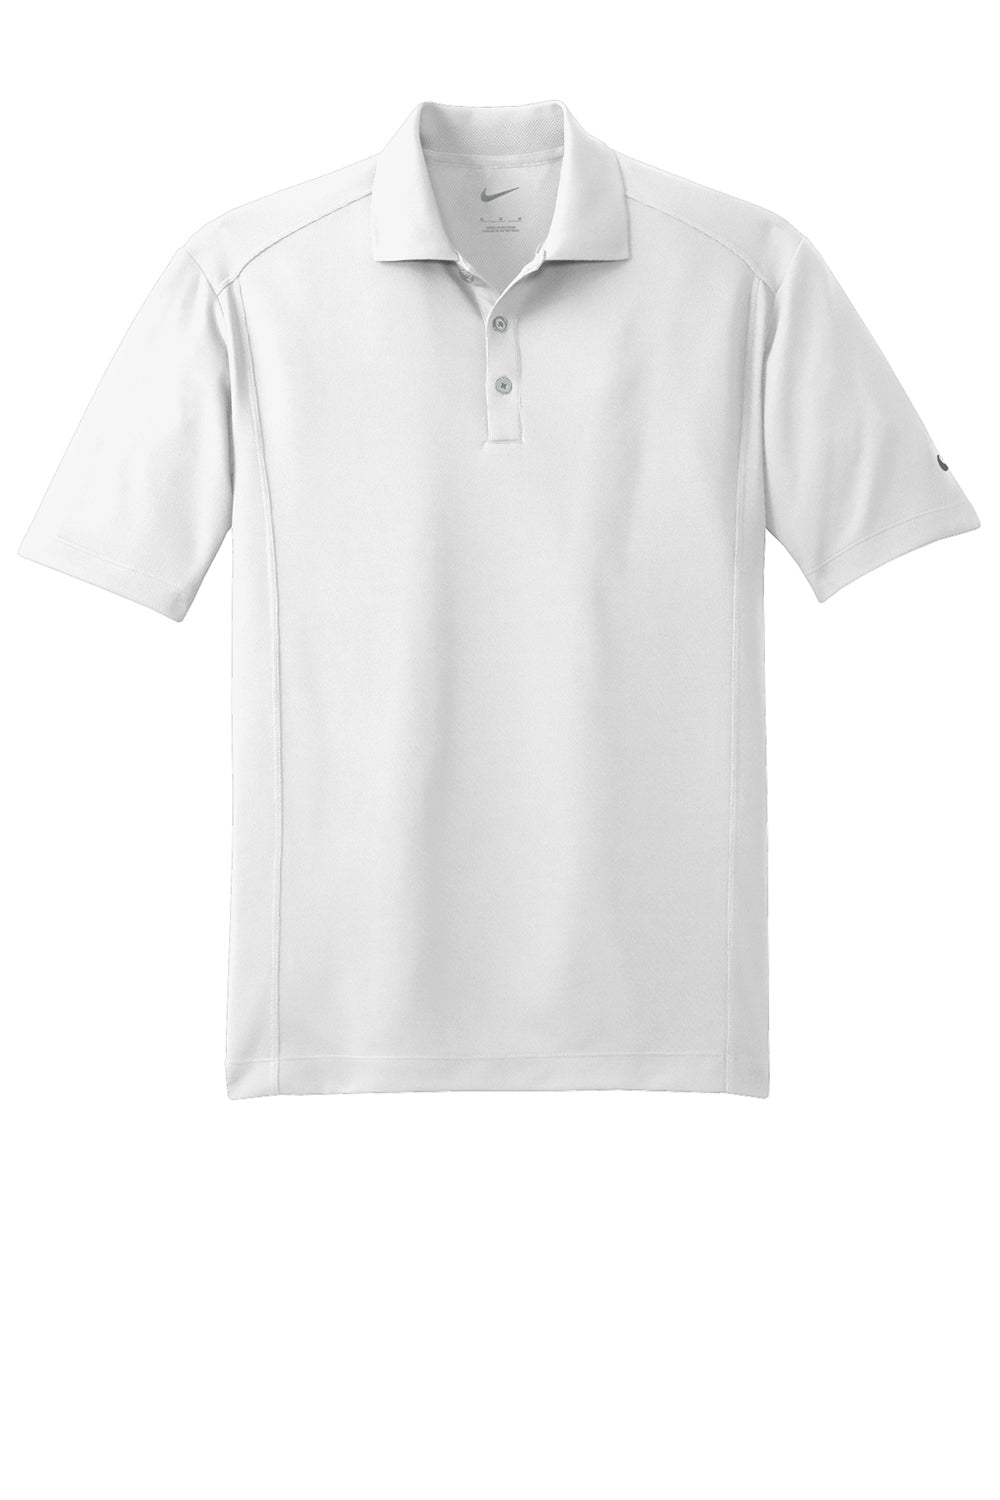 Nike 267020 Mens Classic Dri-Fit Moisture Wicking Short Sleeve Polo Shirt White Flat Front